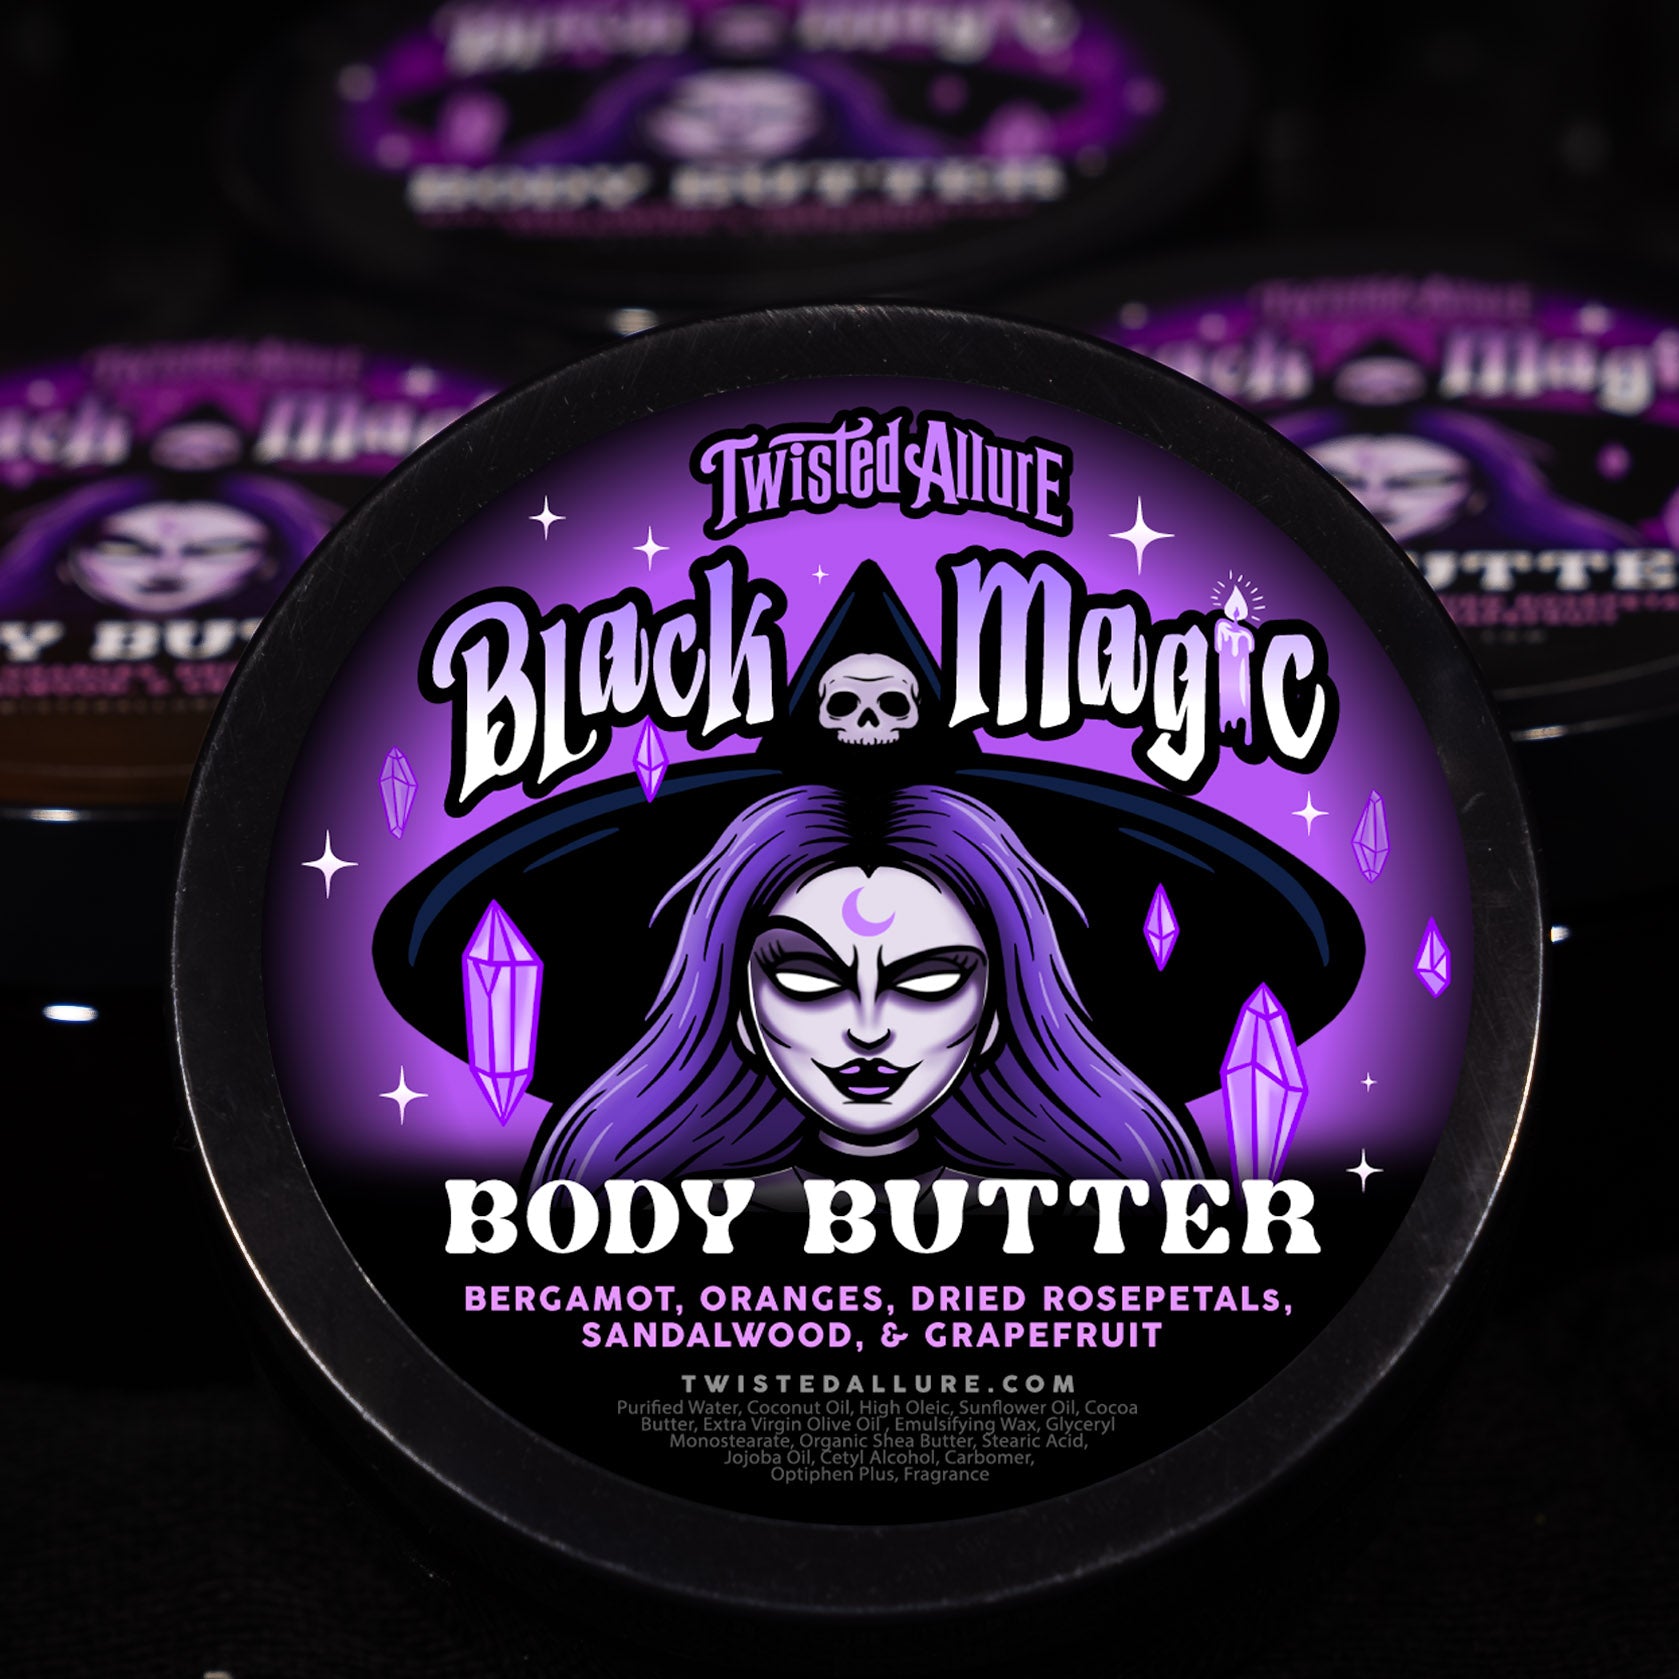 Magic Body Butters